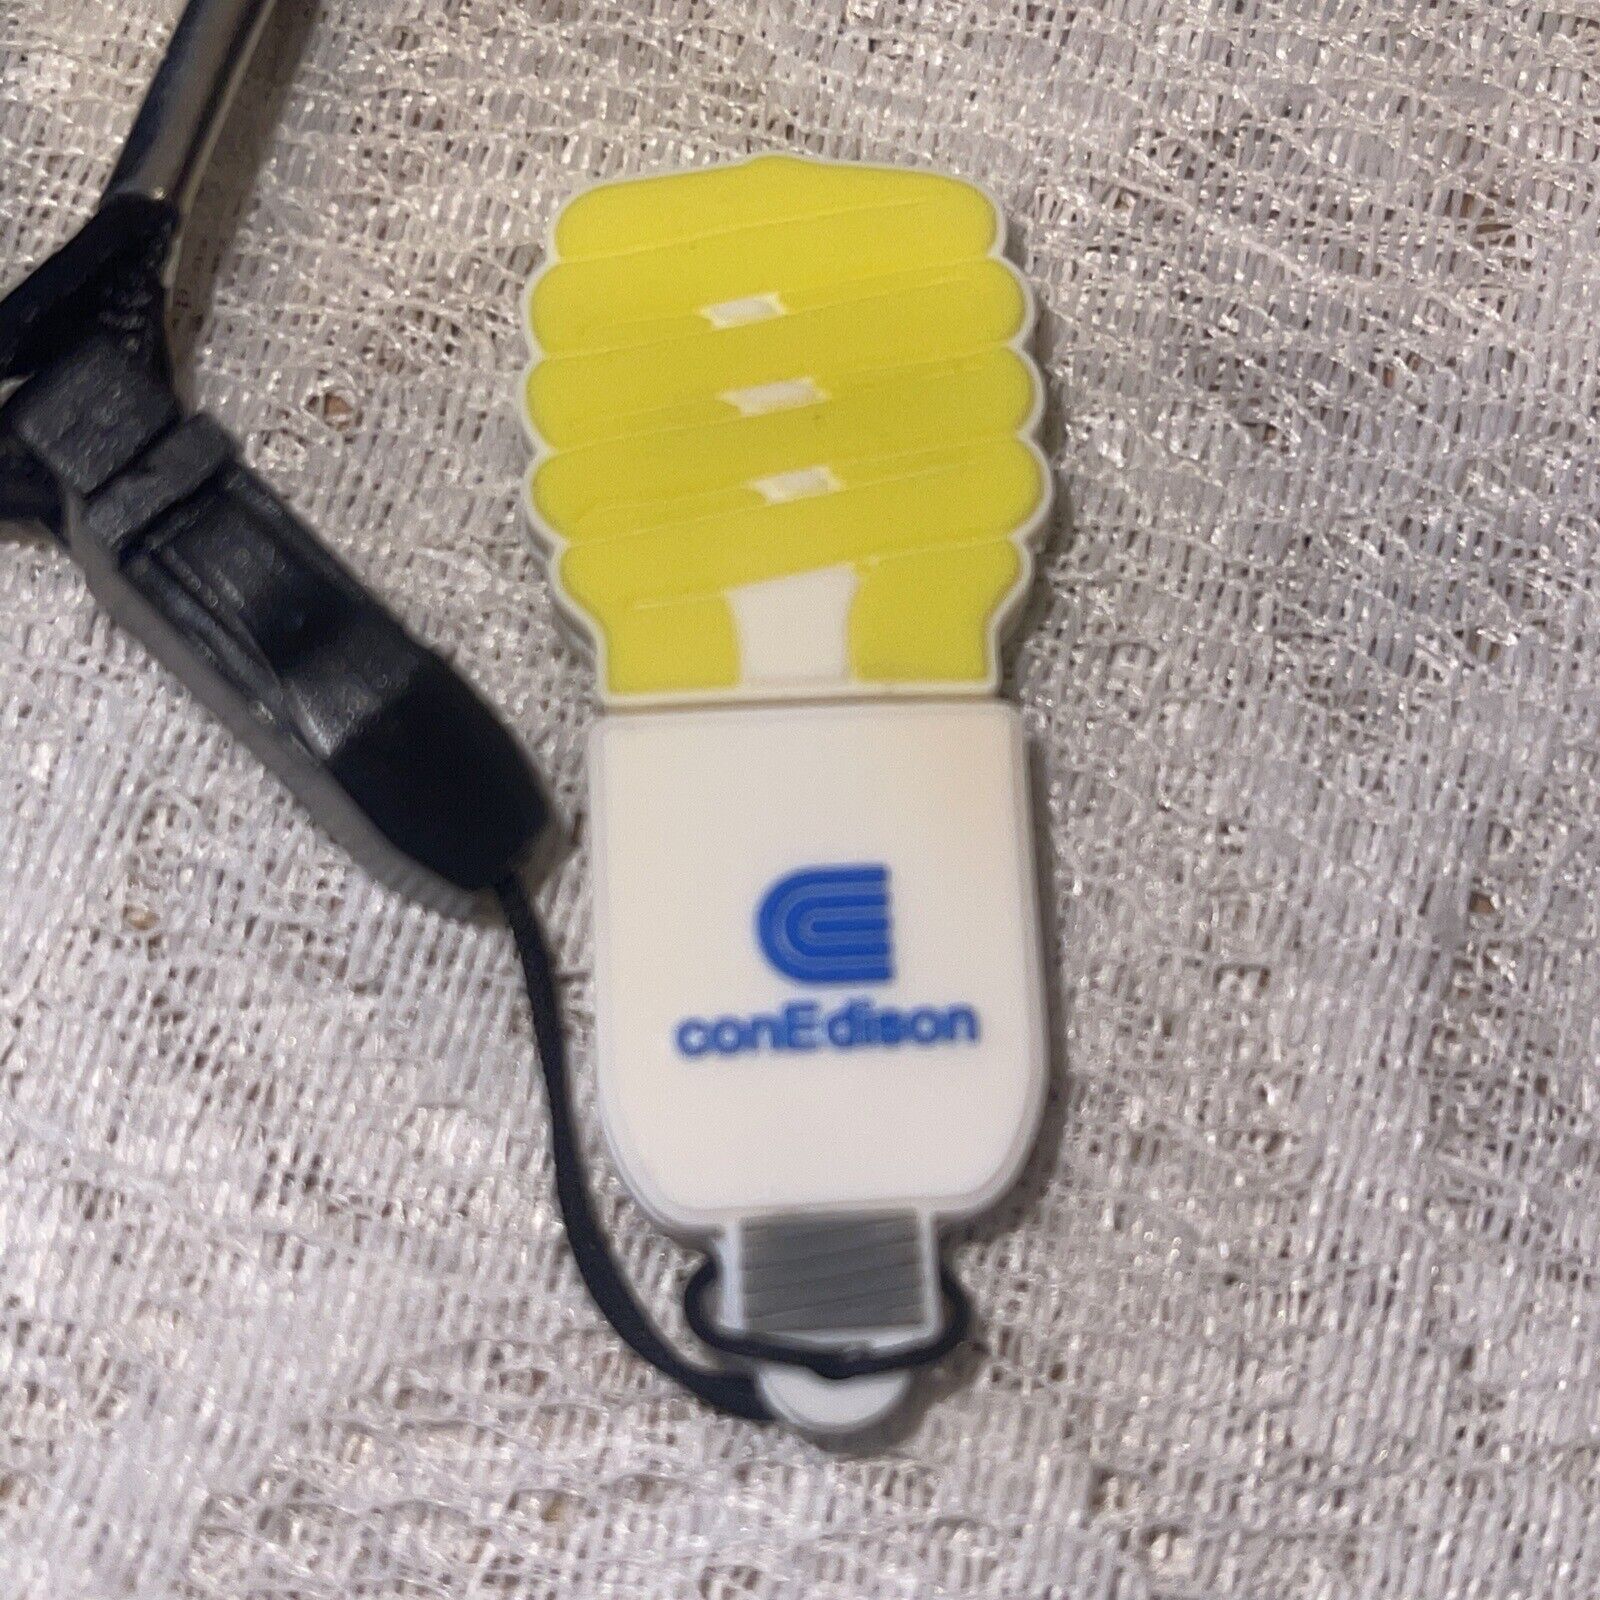 Con Edison Collectible Lightbulb Shaped Flash Drive ConEdison NYC Electric Ad